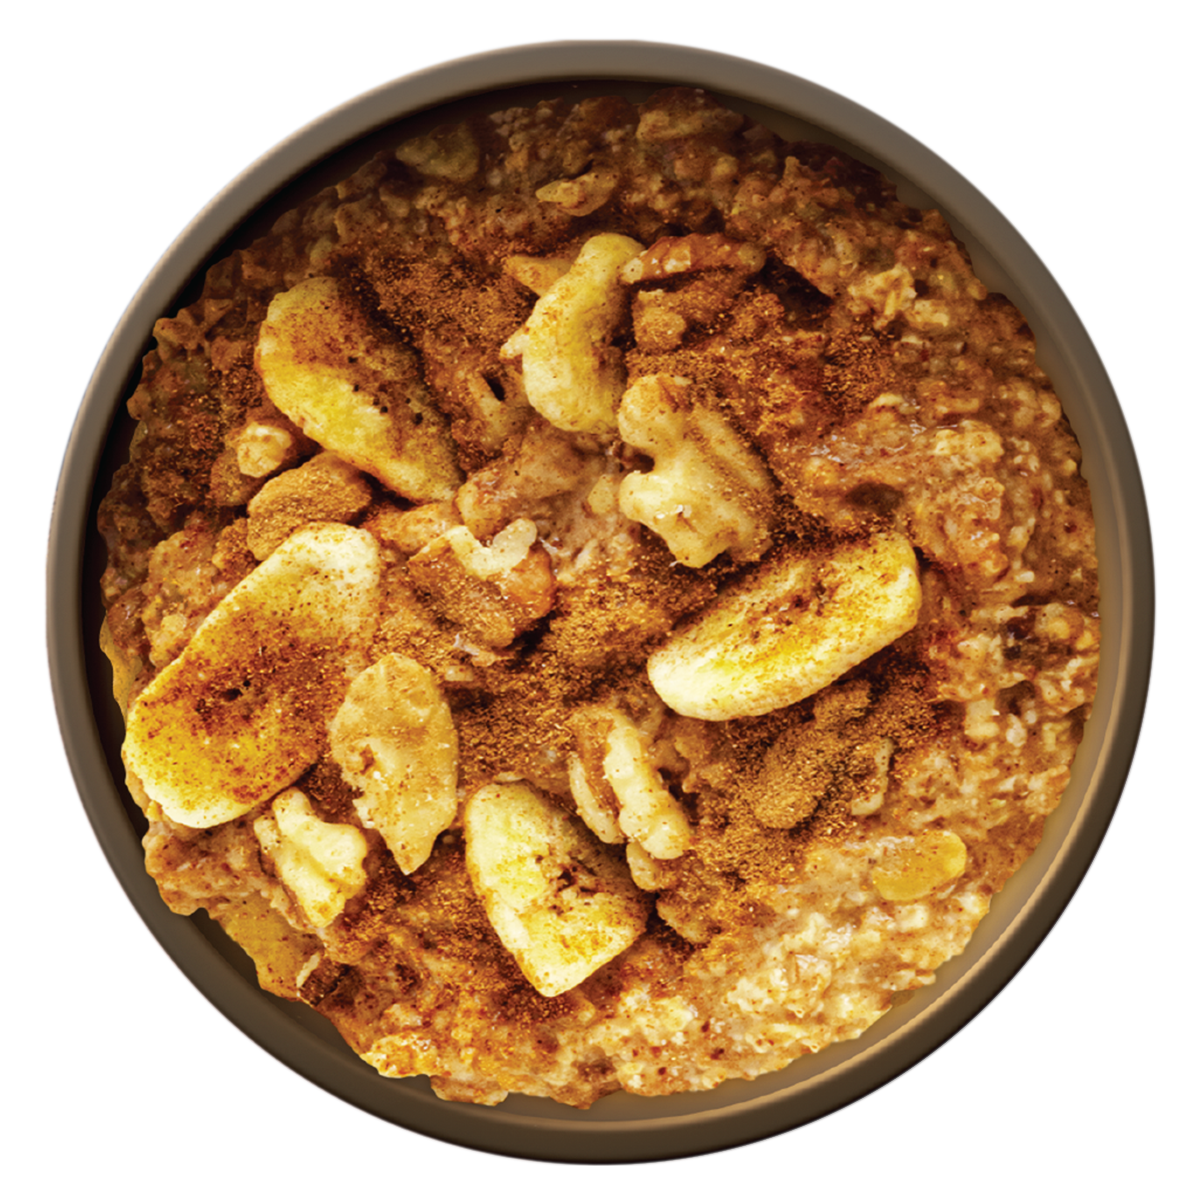 RightOnTrek banana bread oatmeal meal in bowl